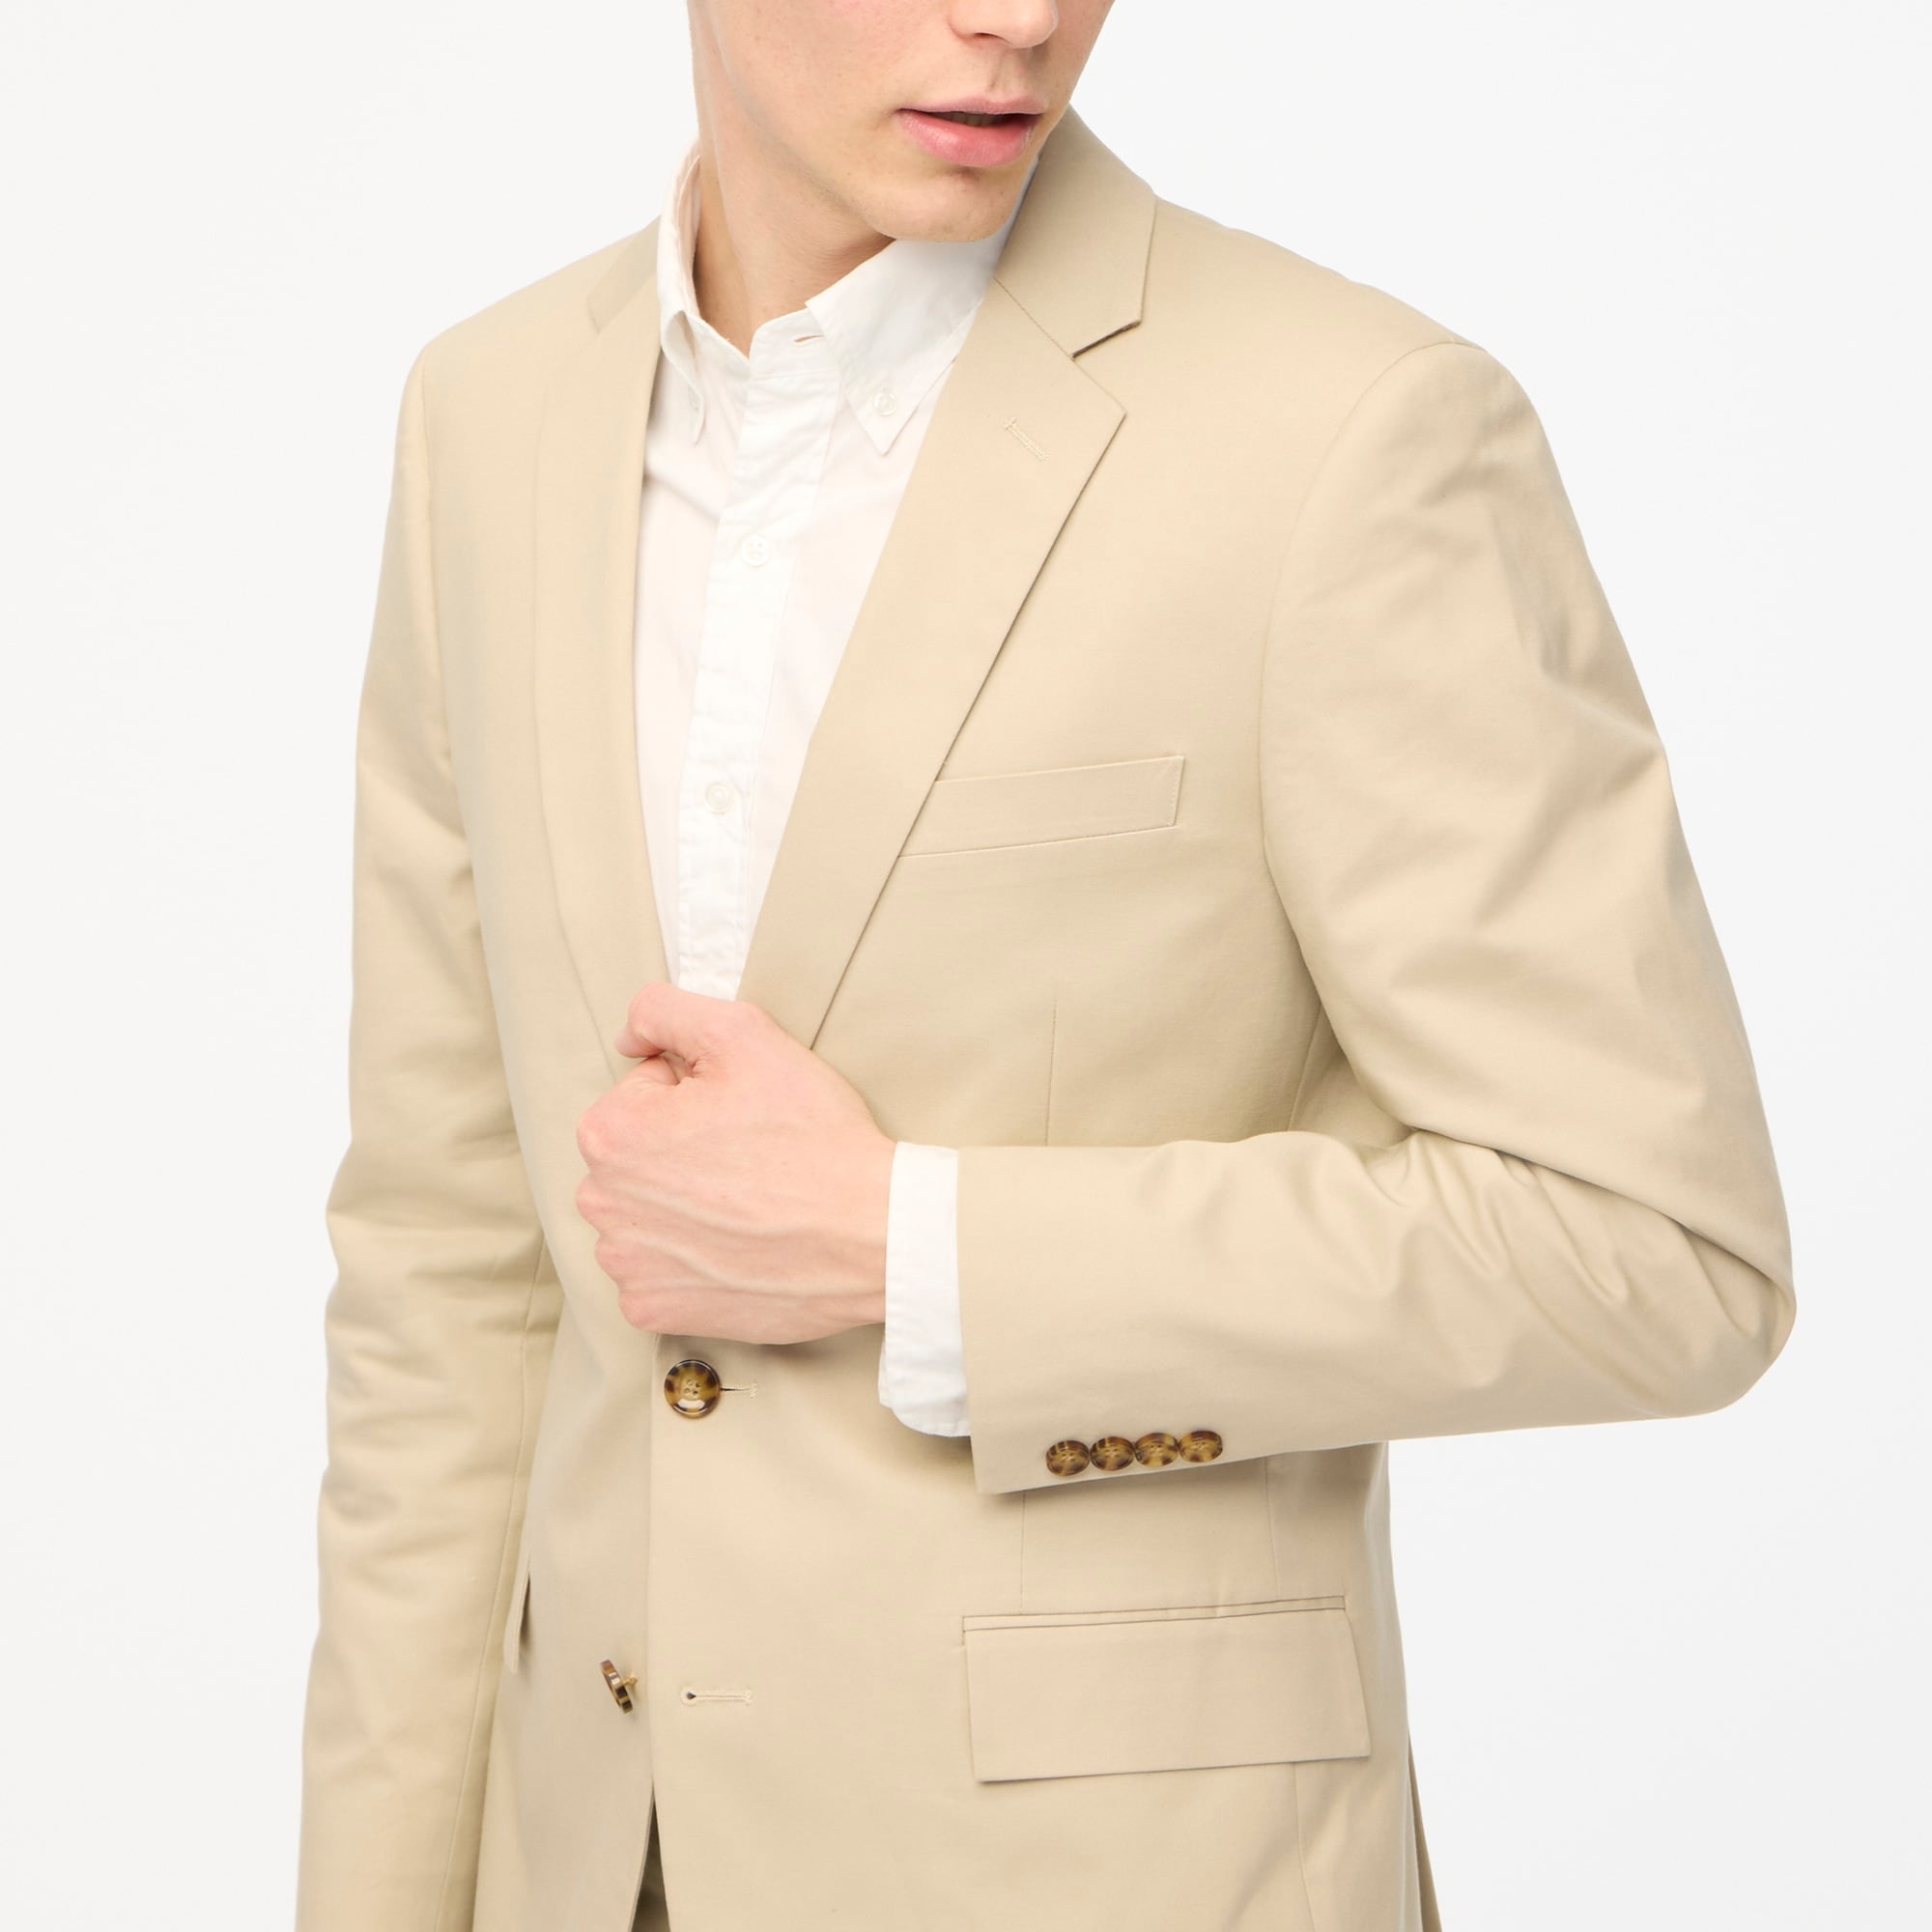 Stretch suit jacket flex chino